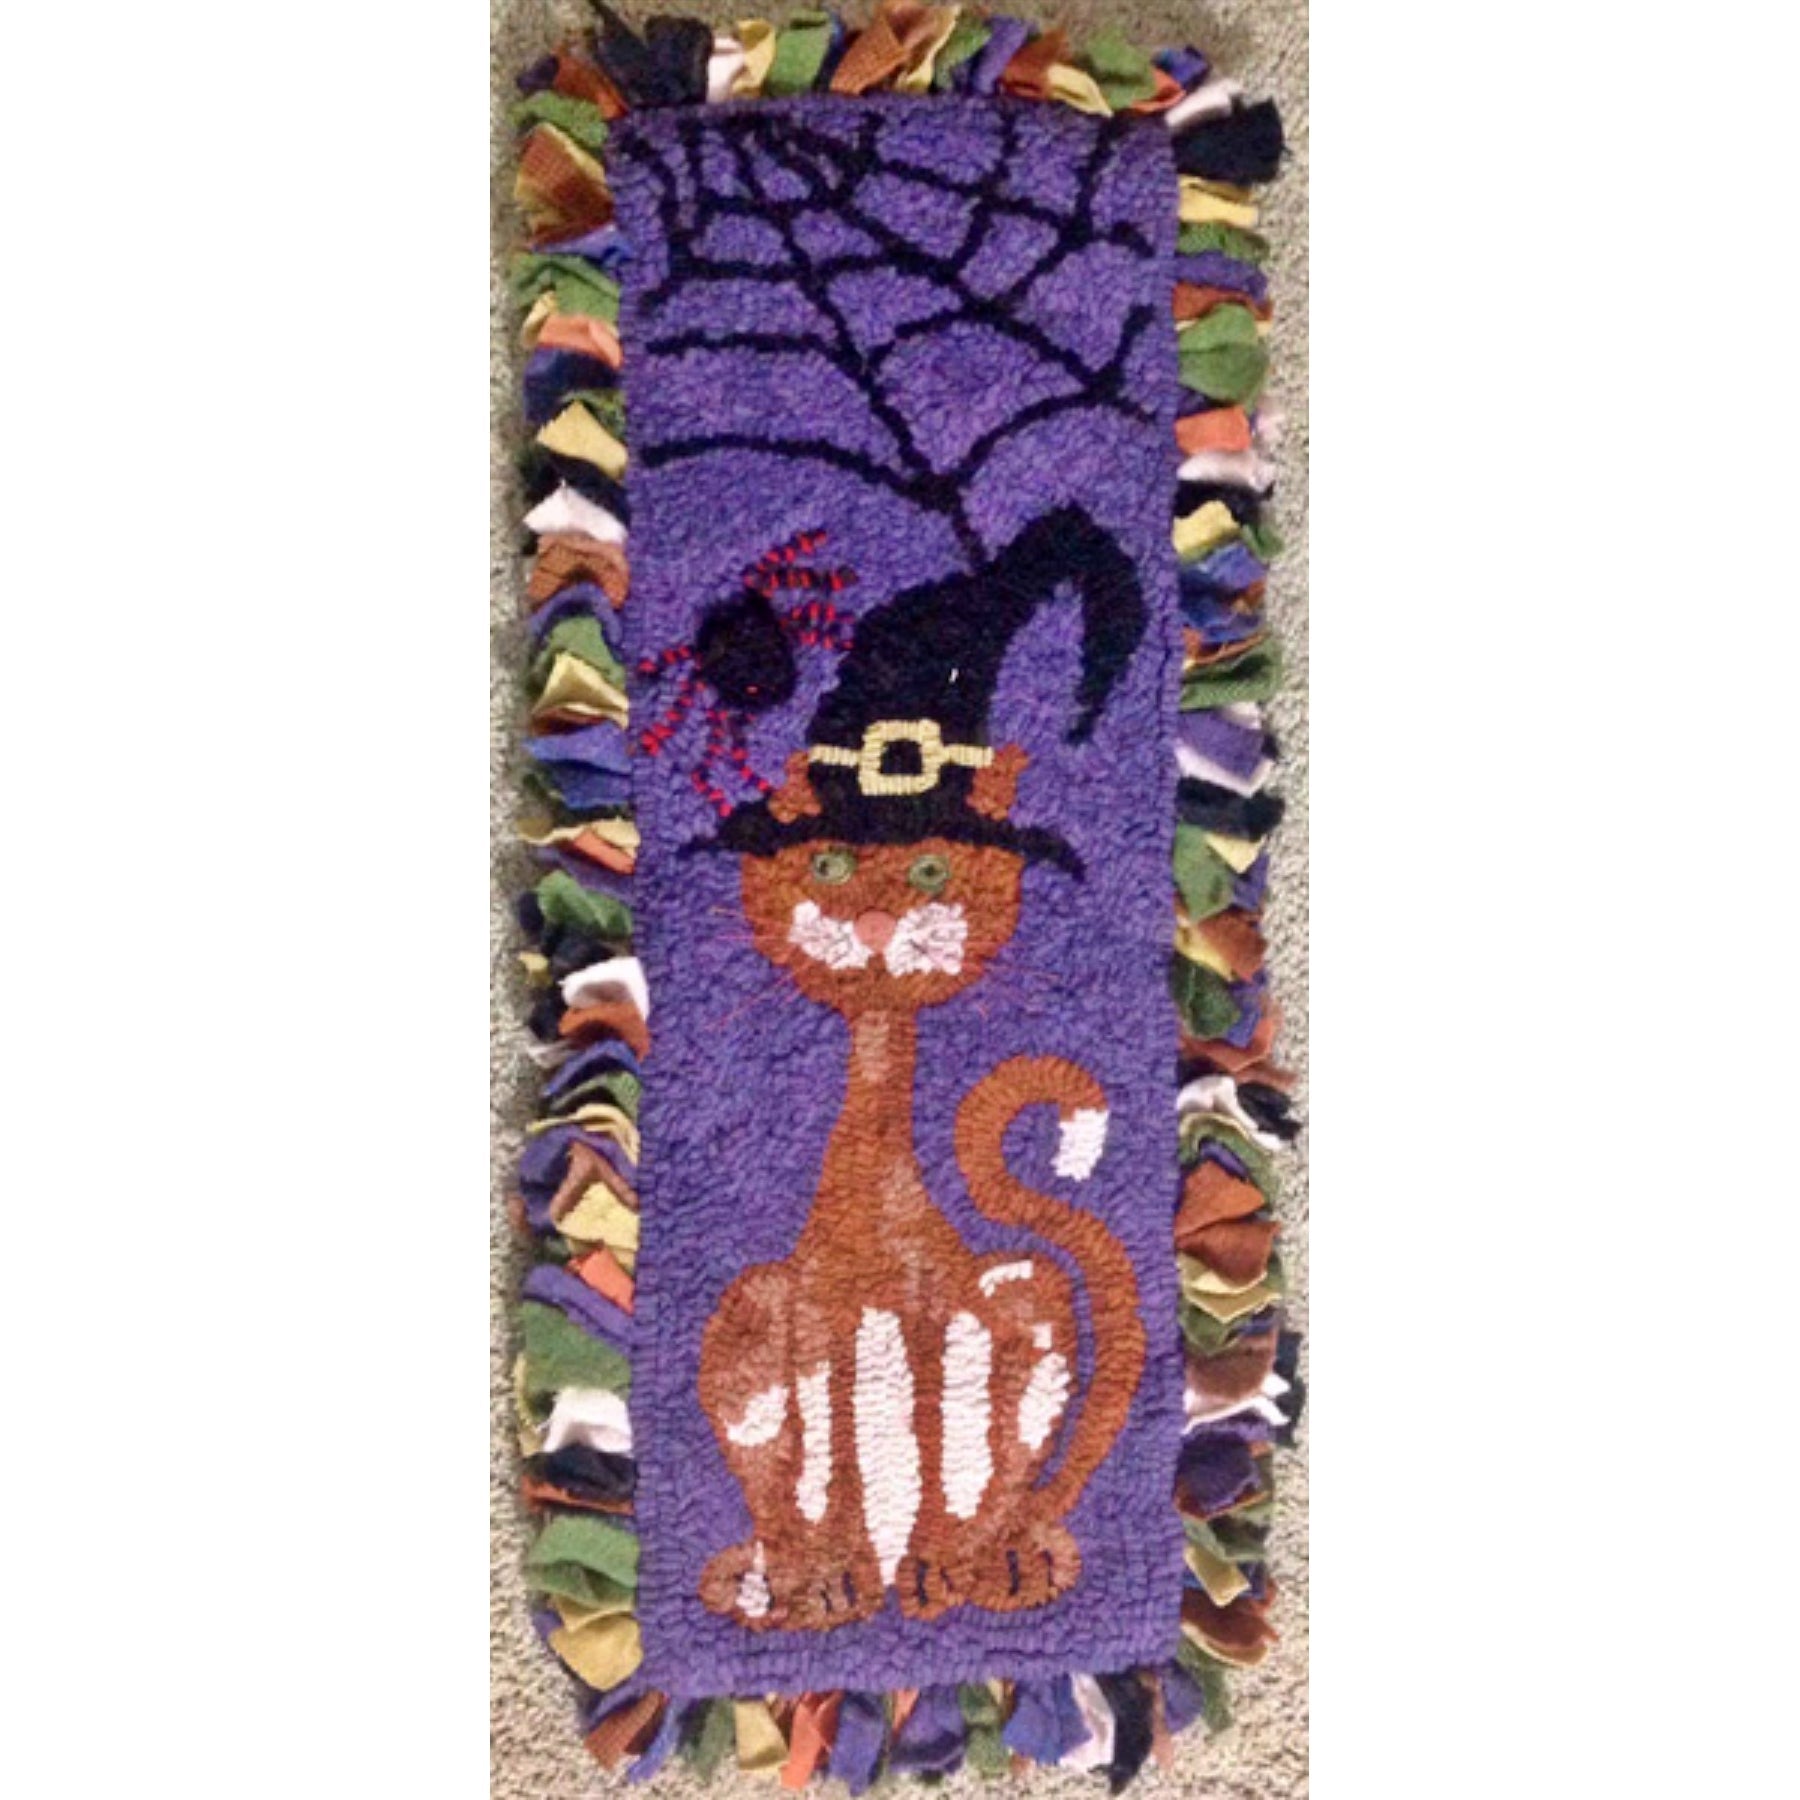 Spooky Cat, rug hooked by Marj Miller